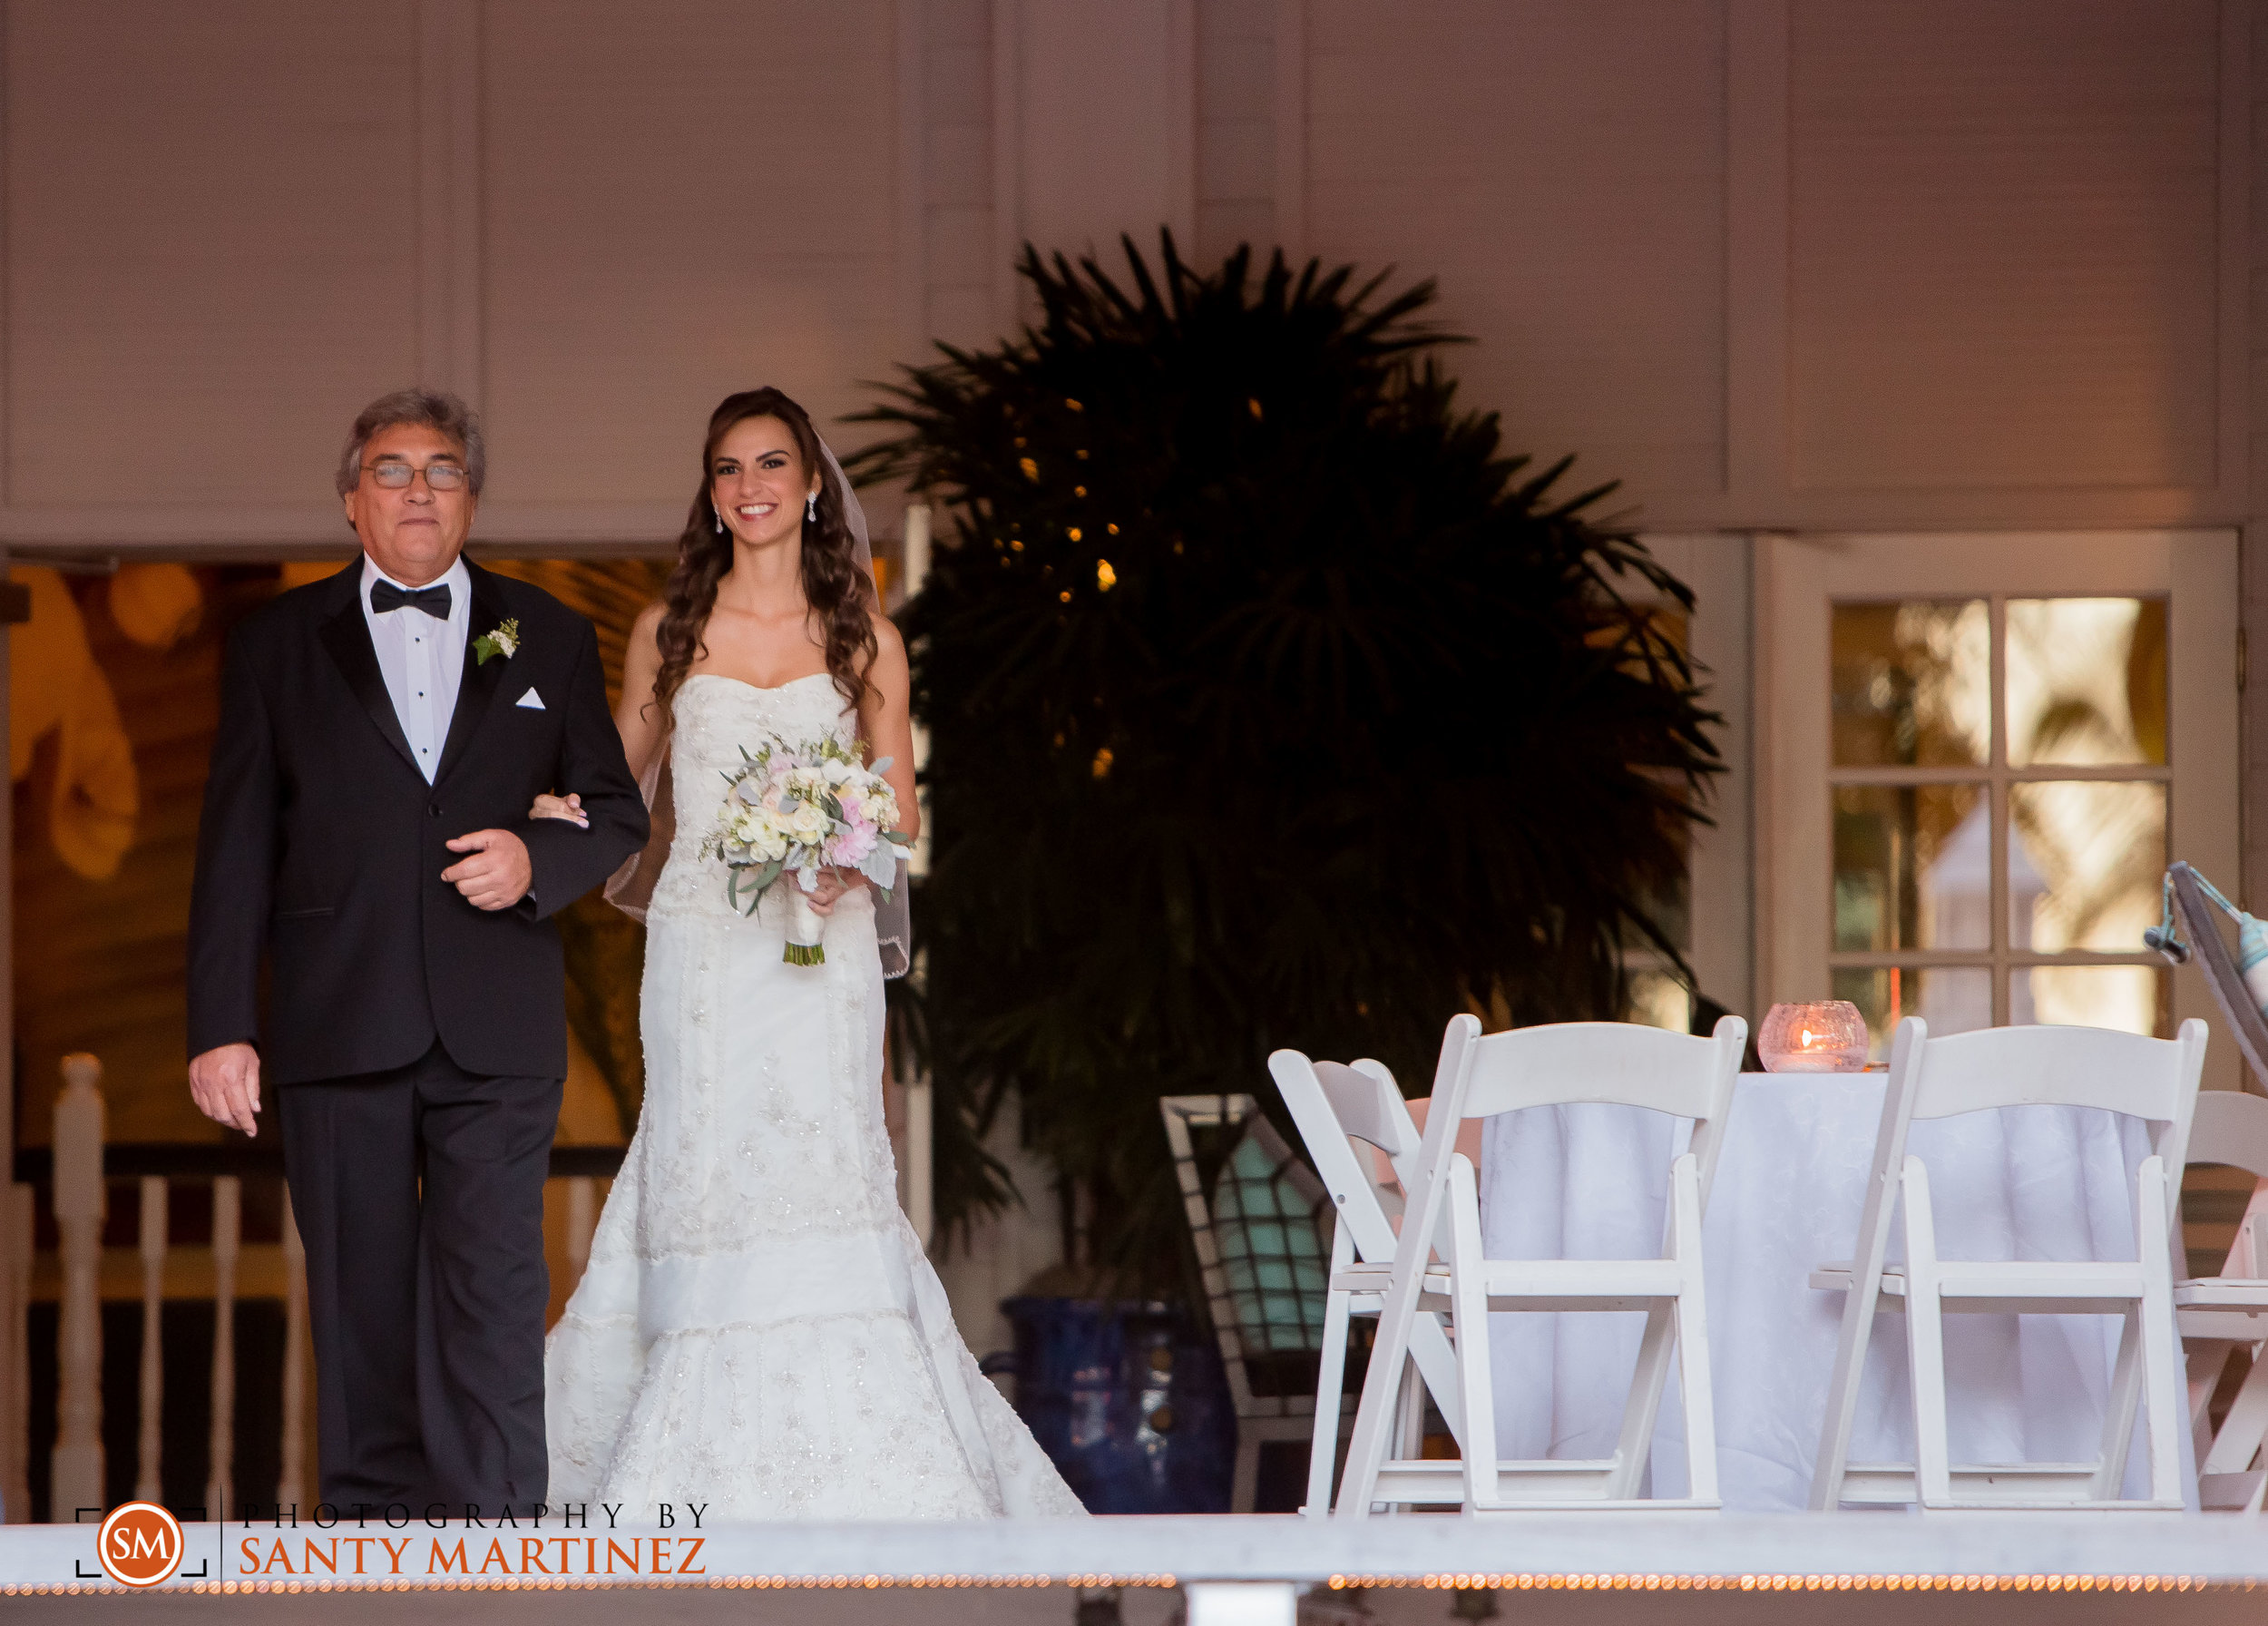 Miami Wedding Photographer - Santy Martinez -21.jpg